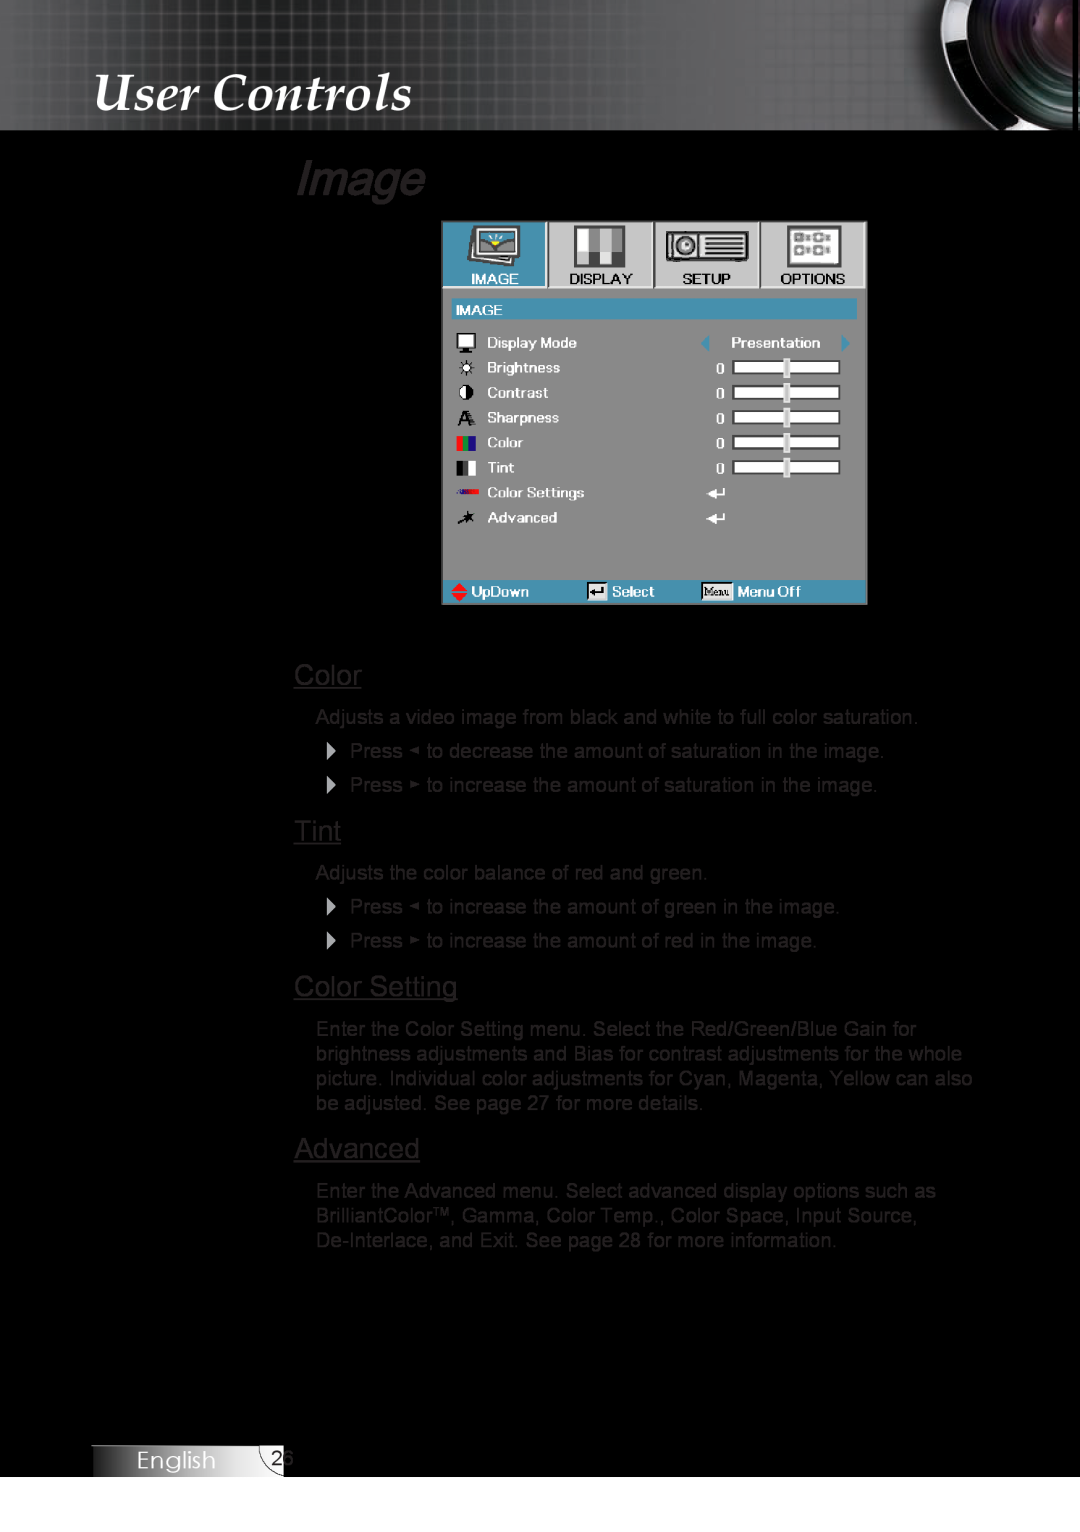 Optoma Technology TX779P3D manual User Controls, Image, Tint, Color Setting, Advanced, English 